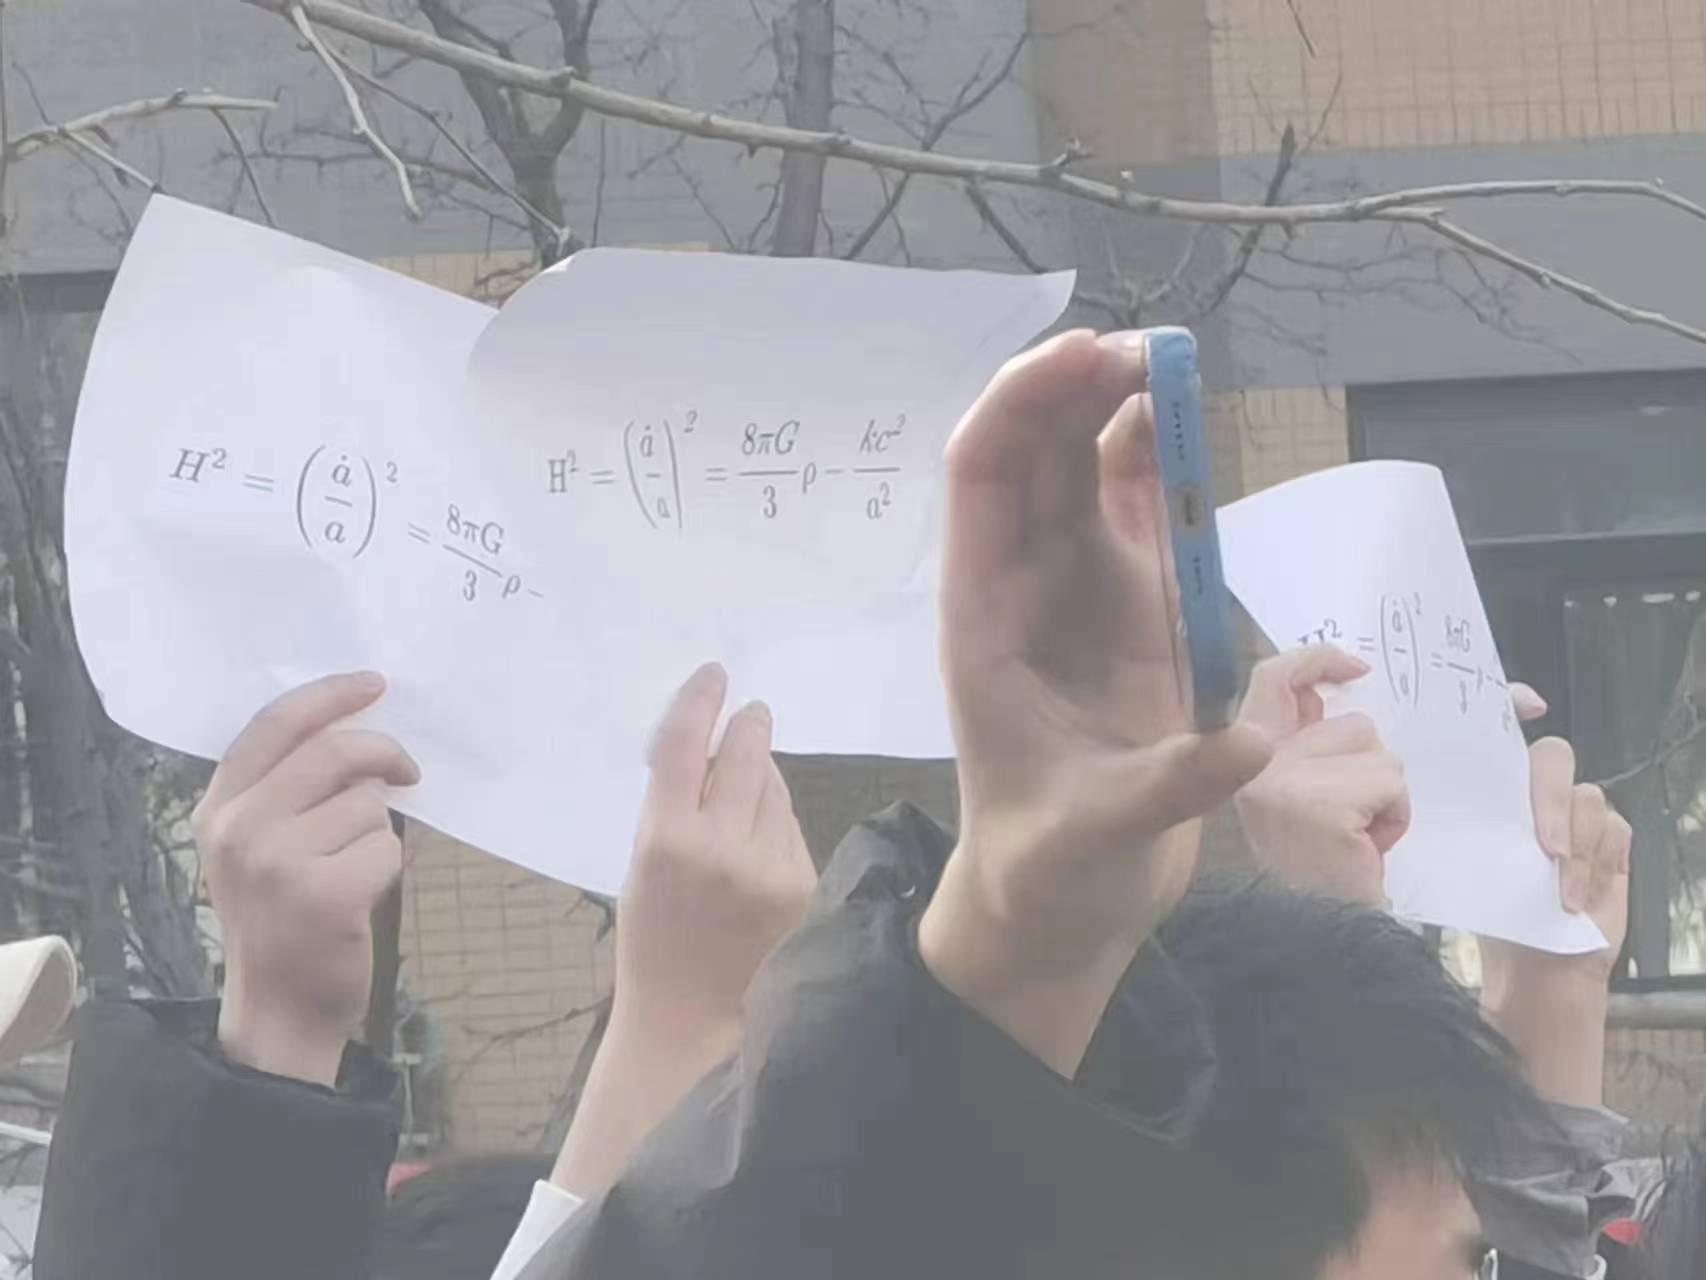 Studenter vid Tsinghua-universitet i Beijing håller upp A4-papper med Friedmanns ekvation. Friedmann uttalas som ”free man” i Kina.